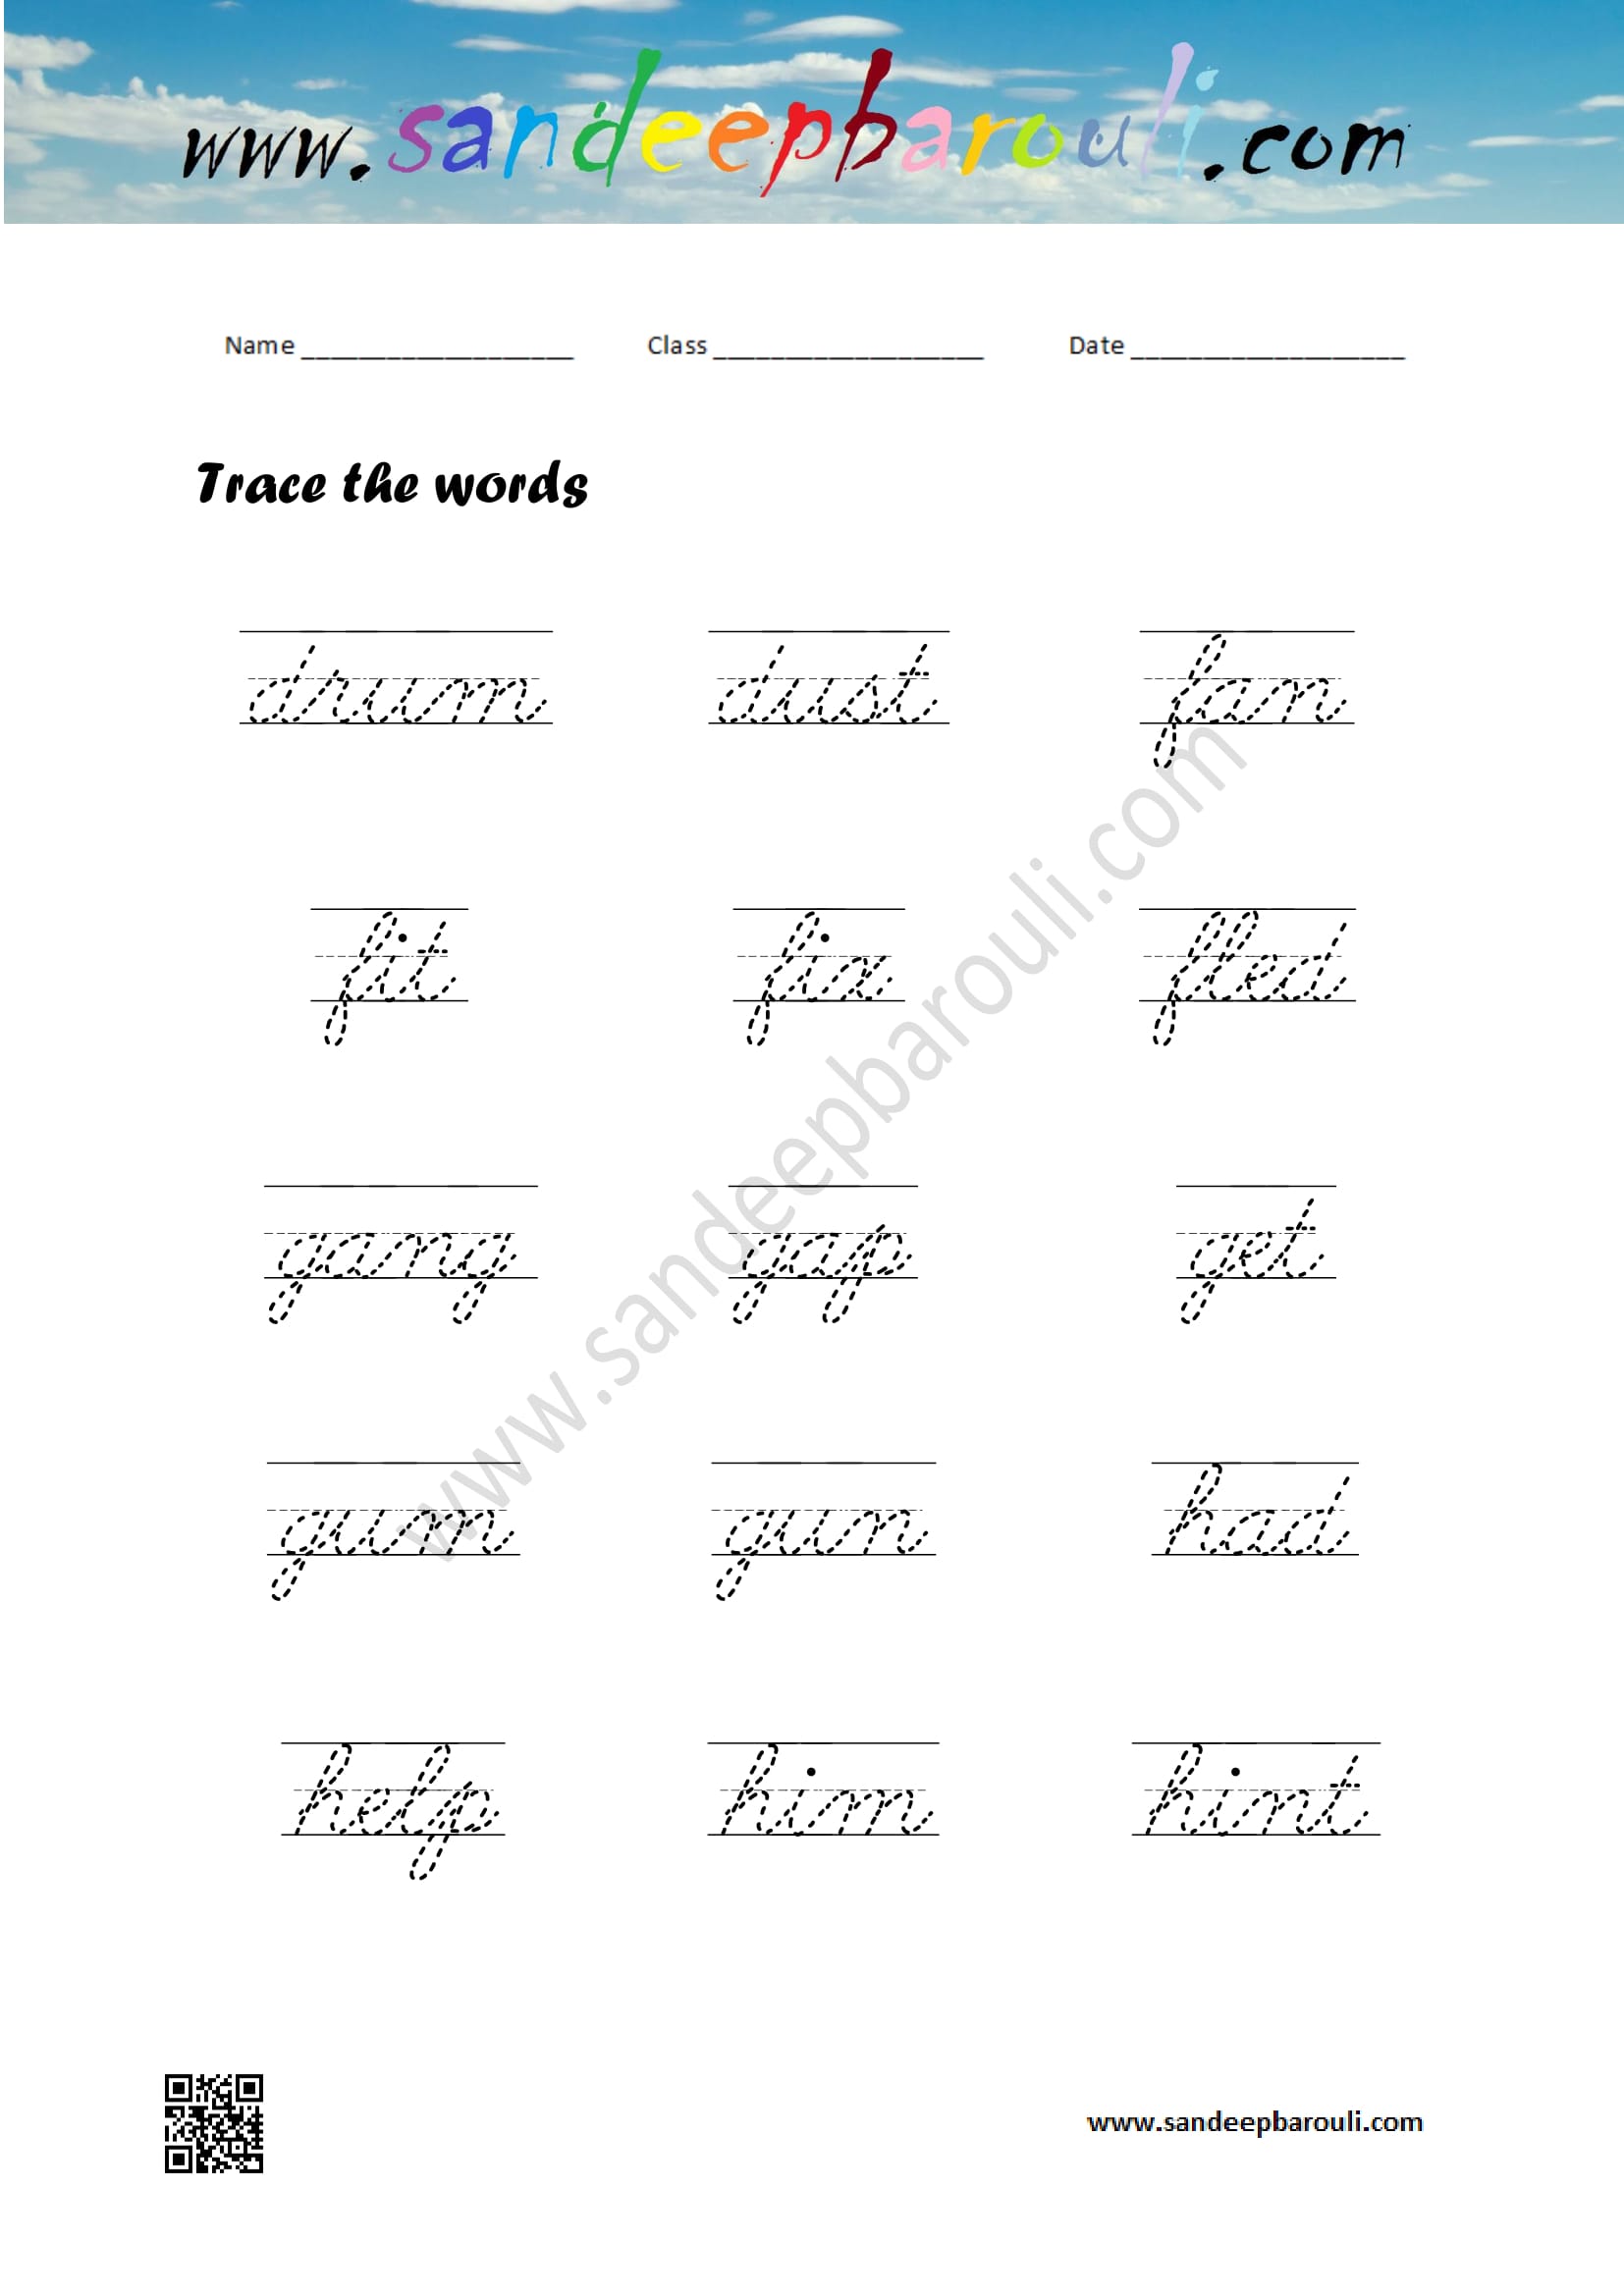 Cursive Writing Worksheet – Trace the words 1 – SandeepBarouli